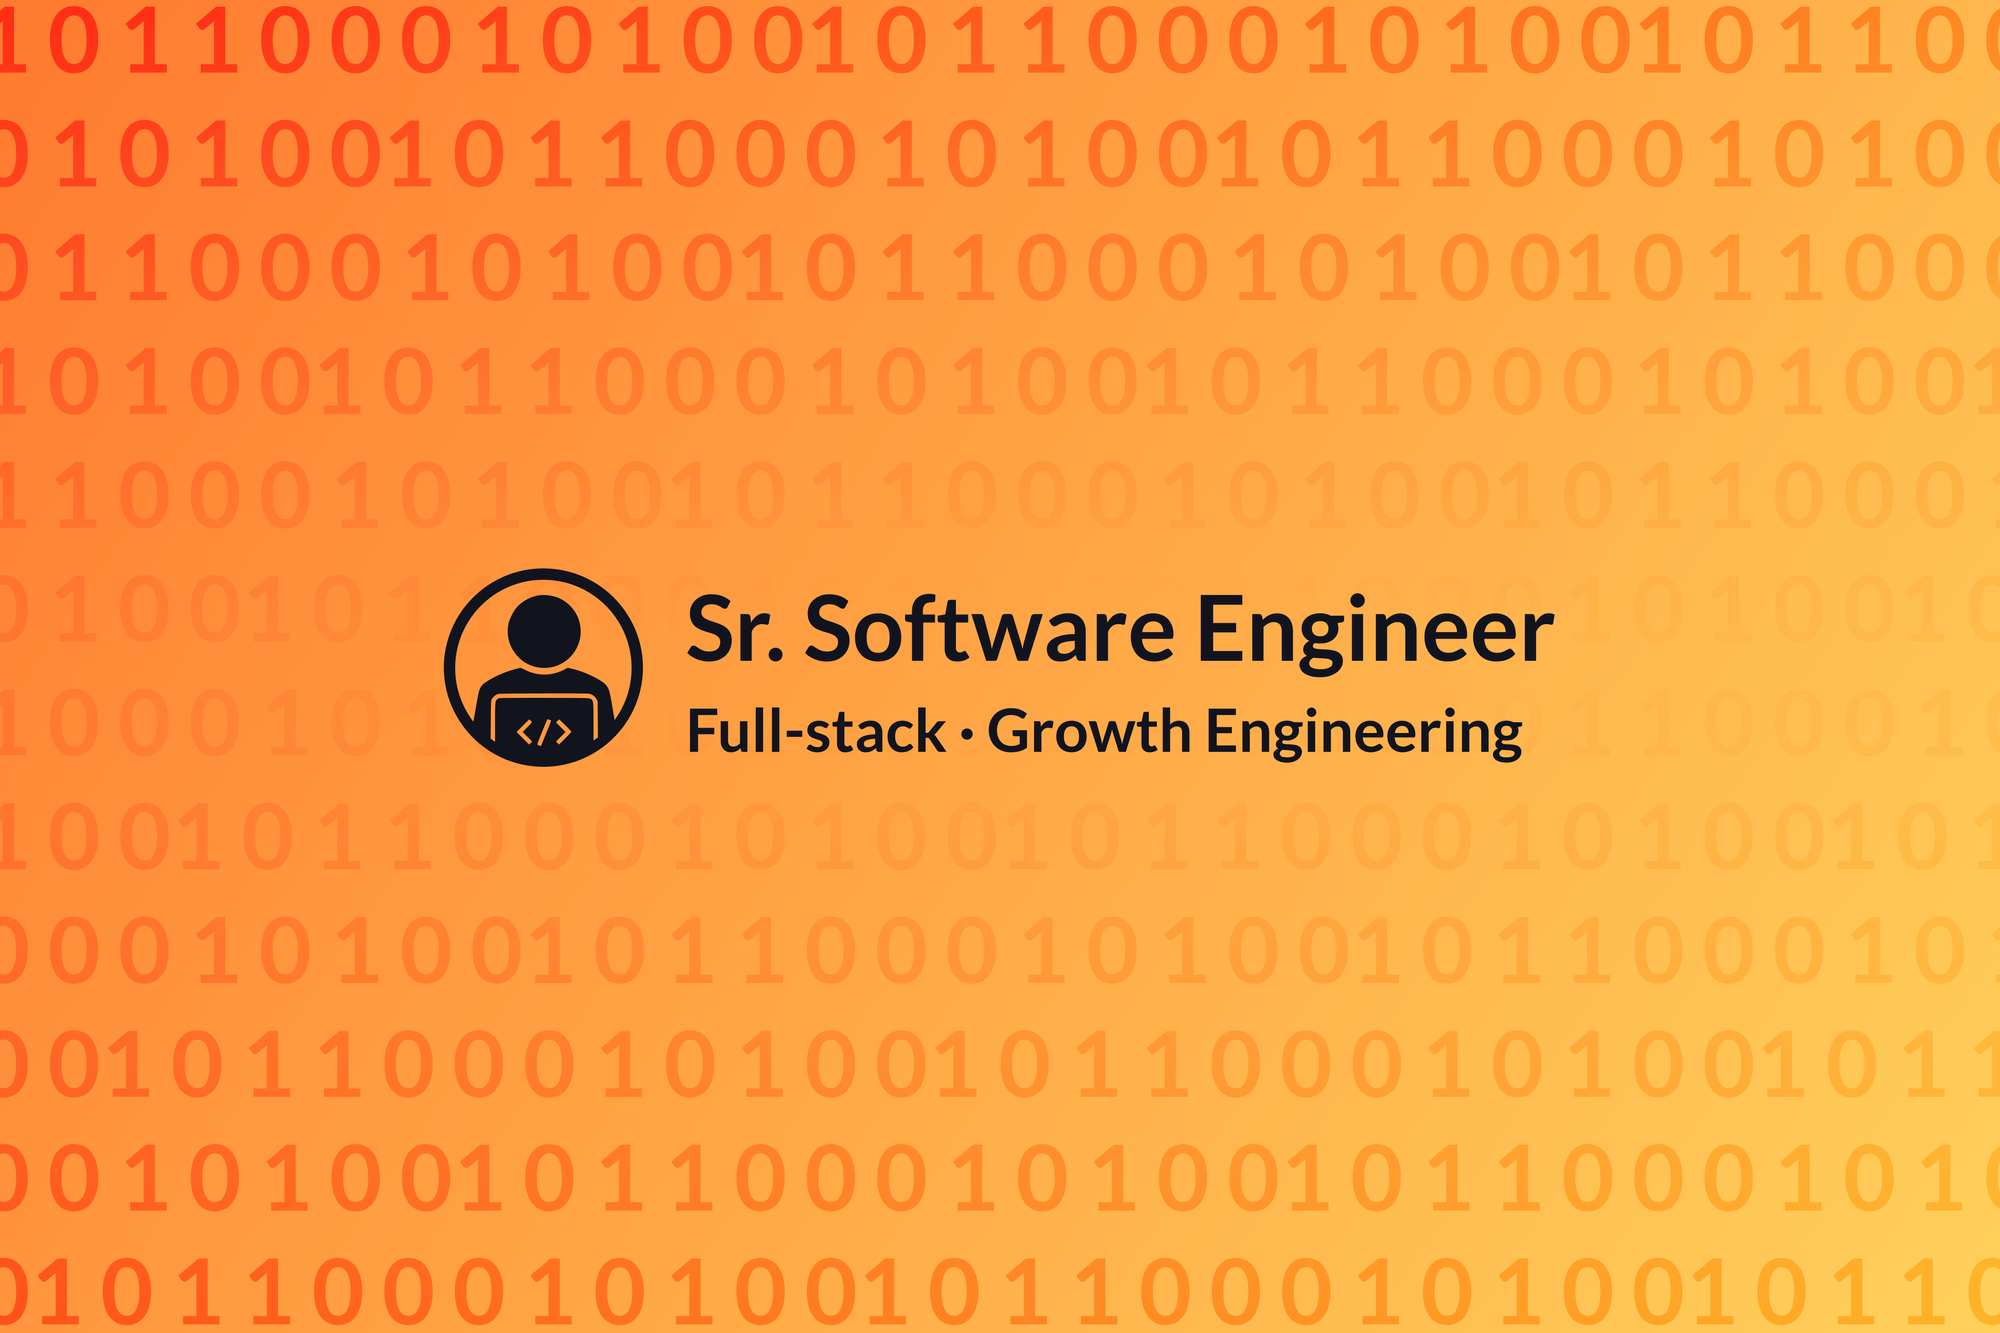 Senior Software Engineer, Full-stack (Growth)